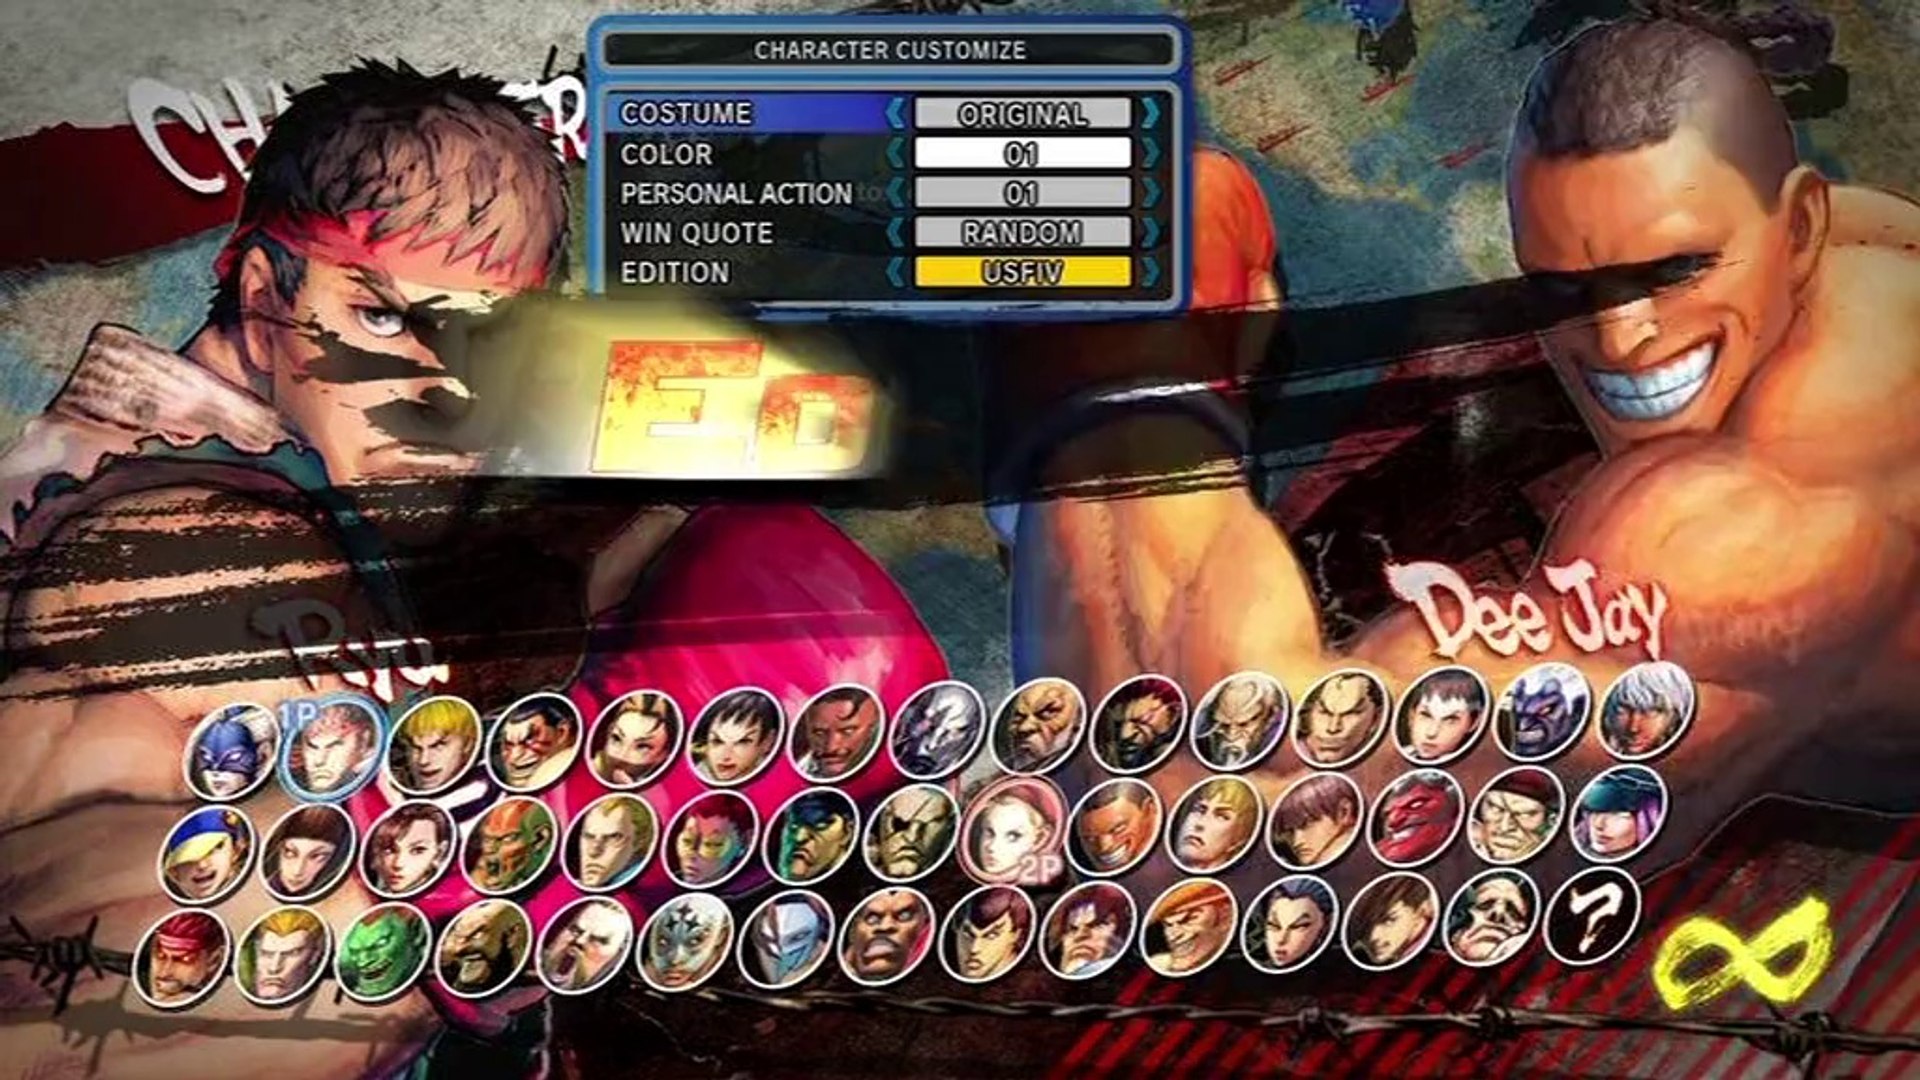 Ultra Street Fighter IV Mobile App Now Available - GameRevolution